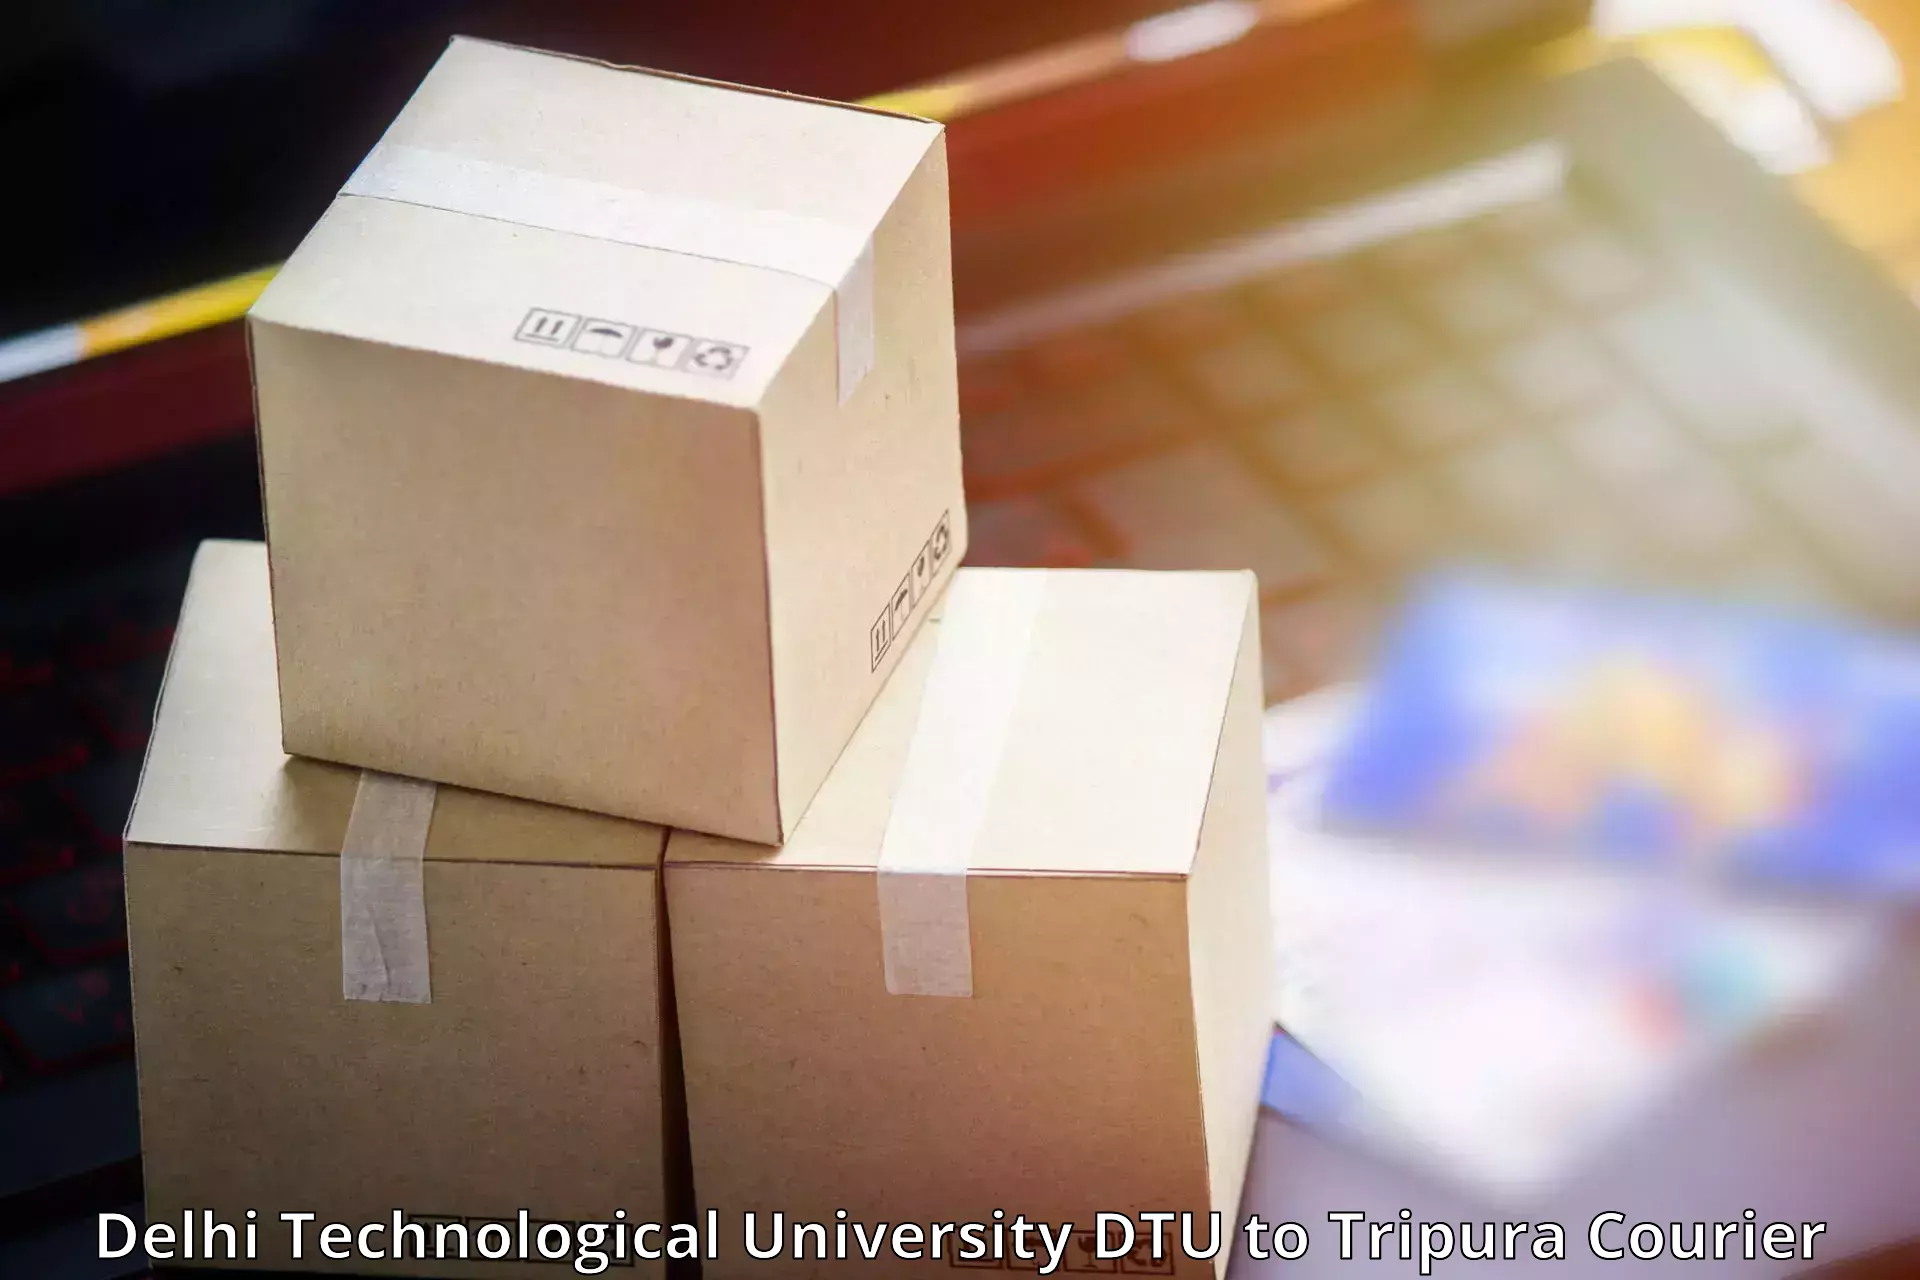 Next day courier Delhi Technological University DTU to Udaipur Tripura